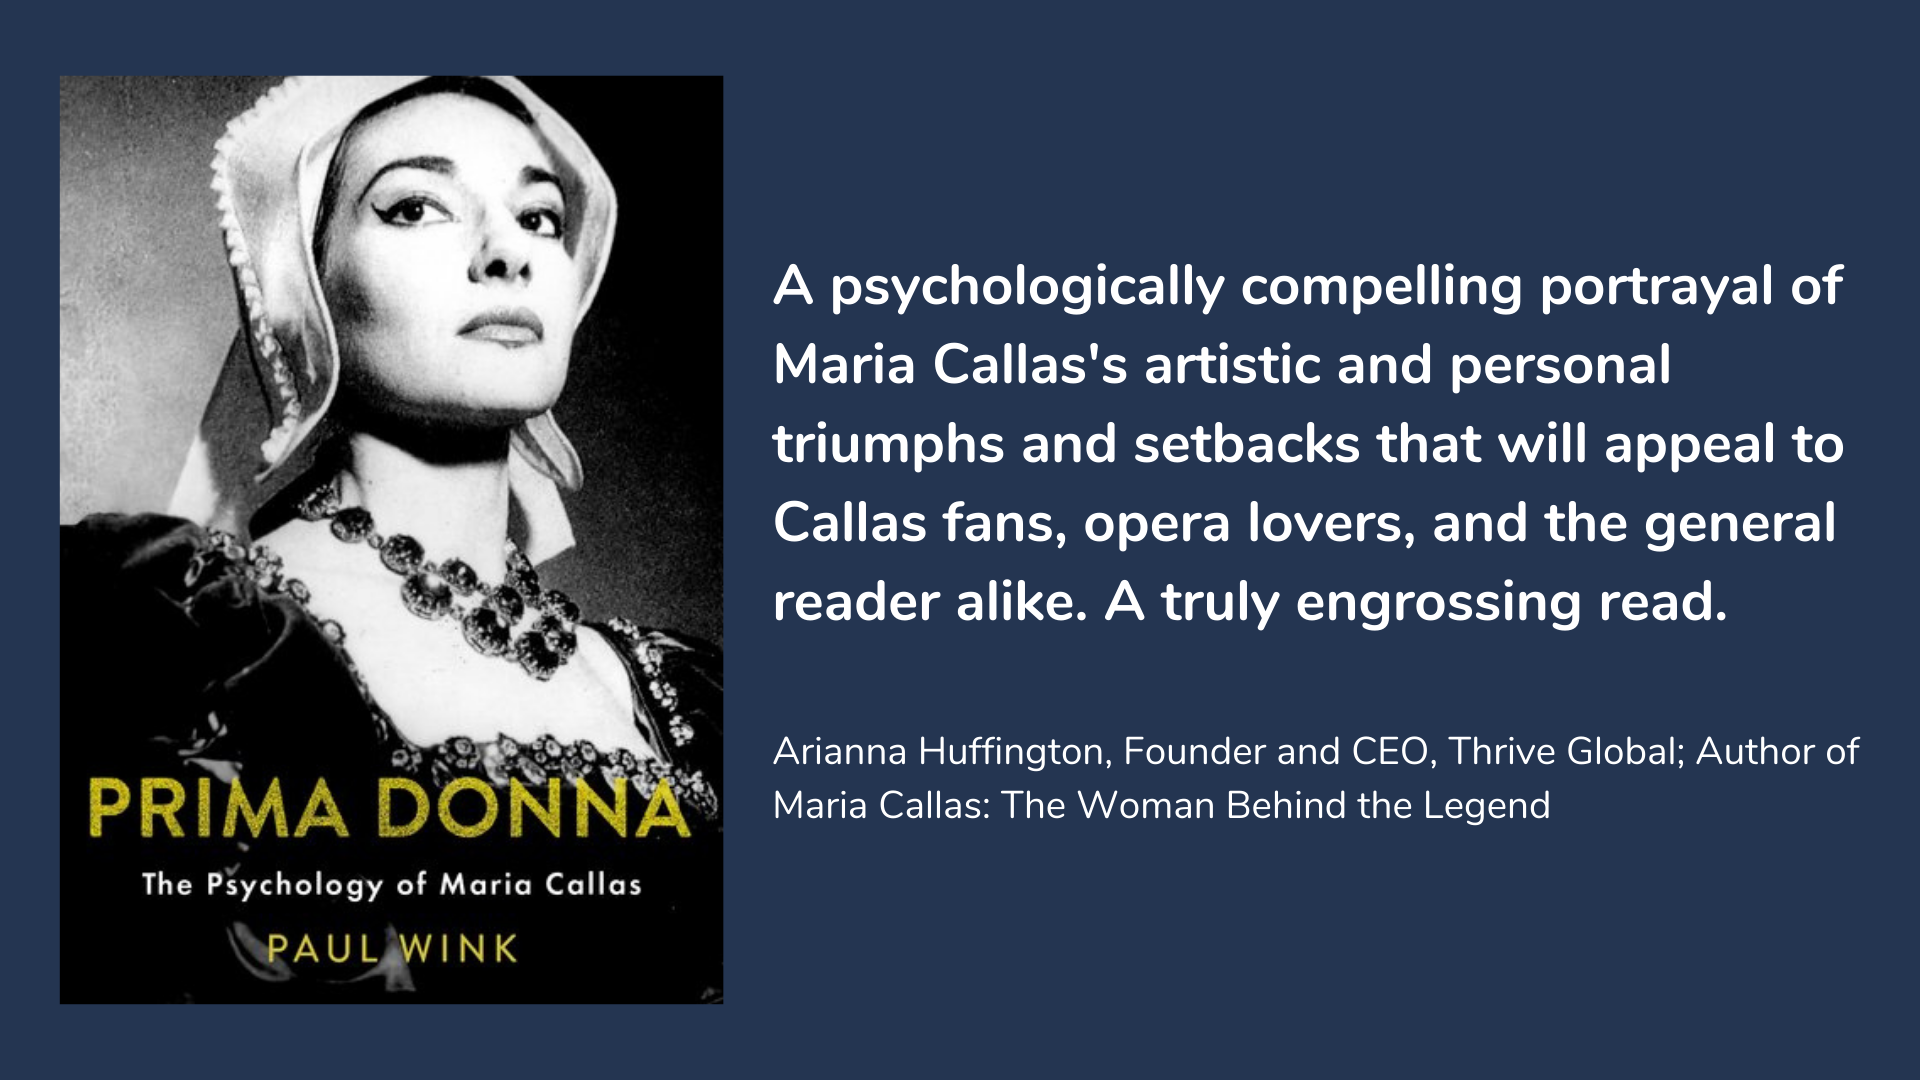 Prima Donna: The Psychology of Maria Callas, book cover and description.